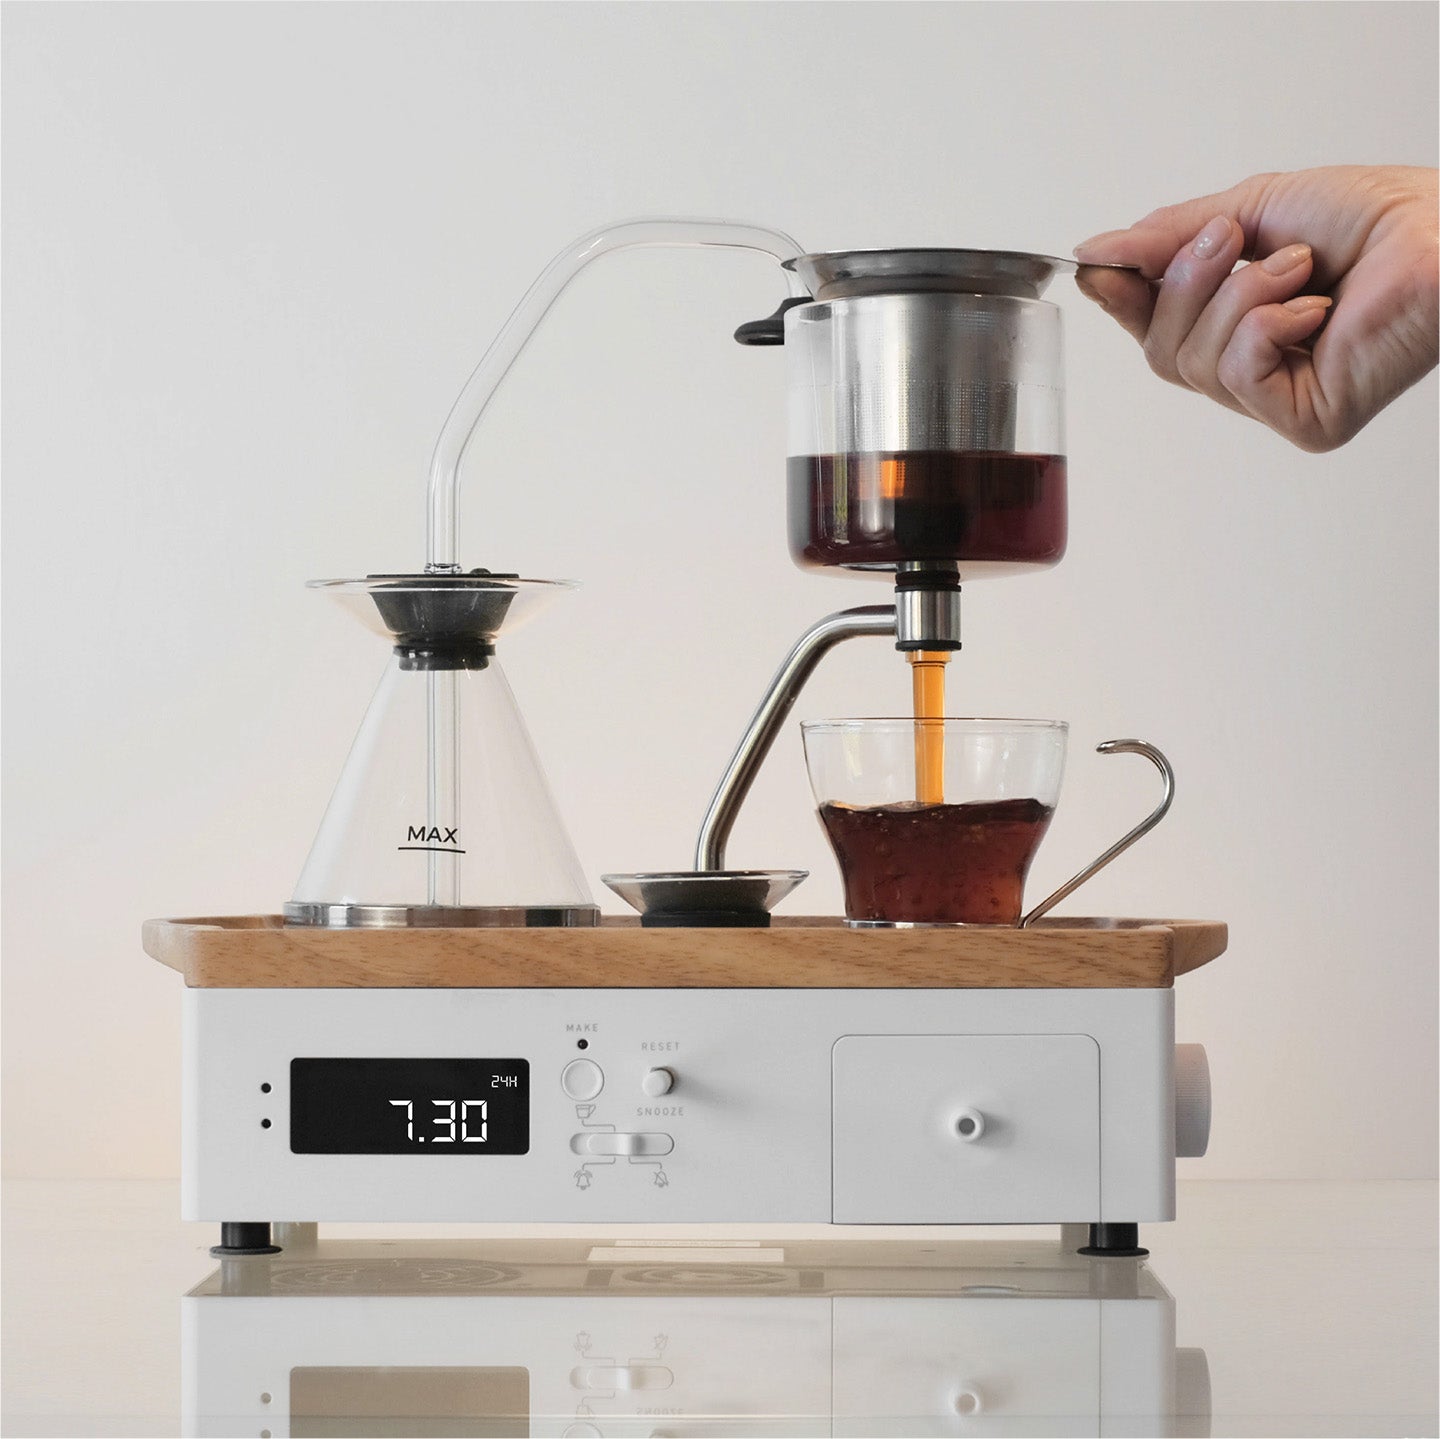 Joy Resolve Barisieur Tea & Coffee Alarm Clock Black :: Green Plantation